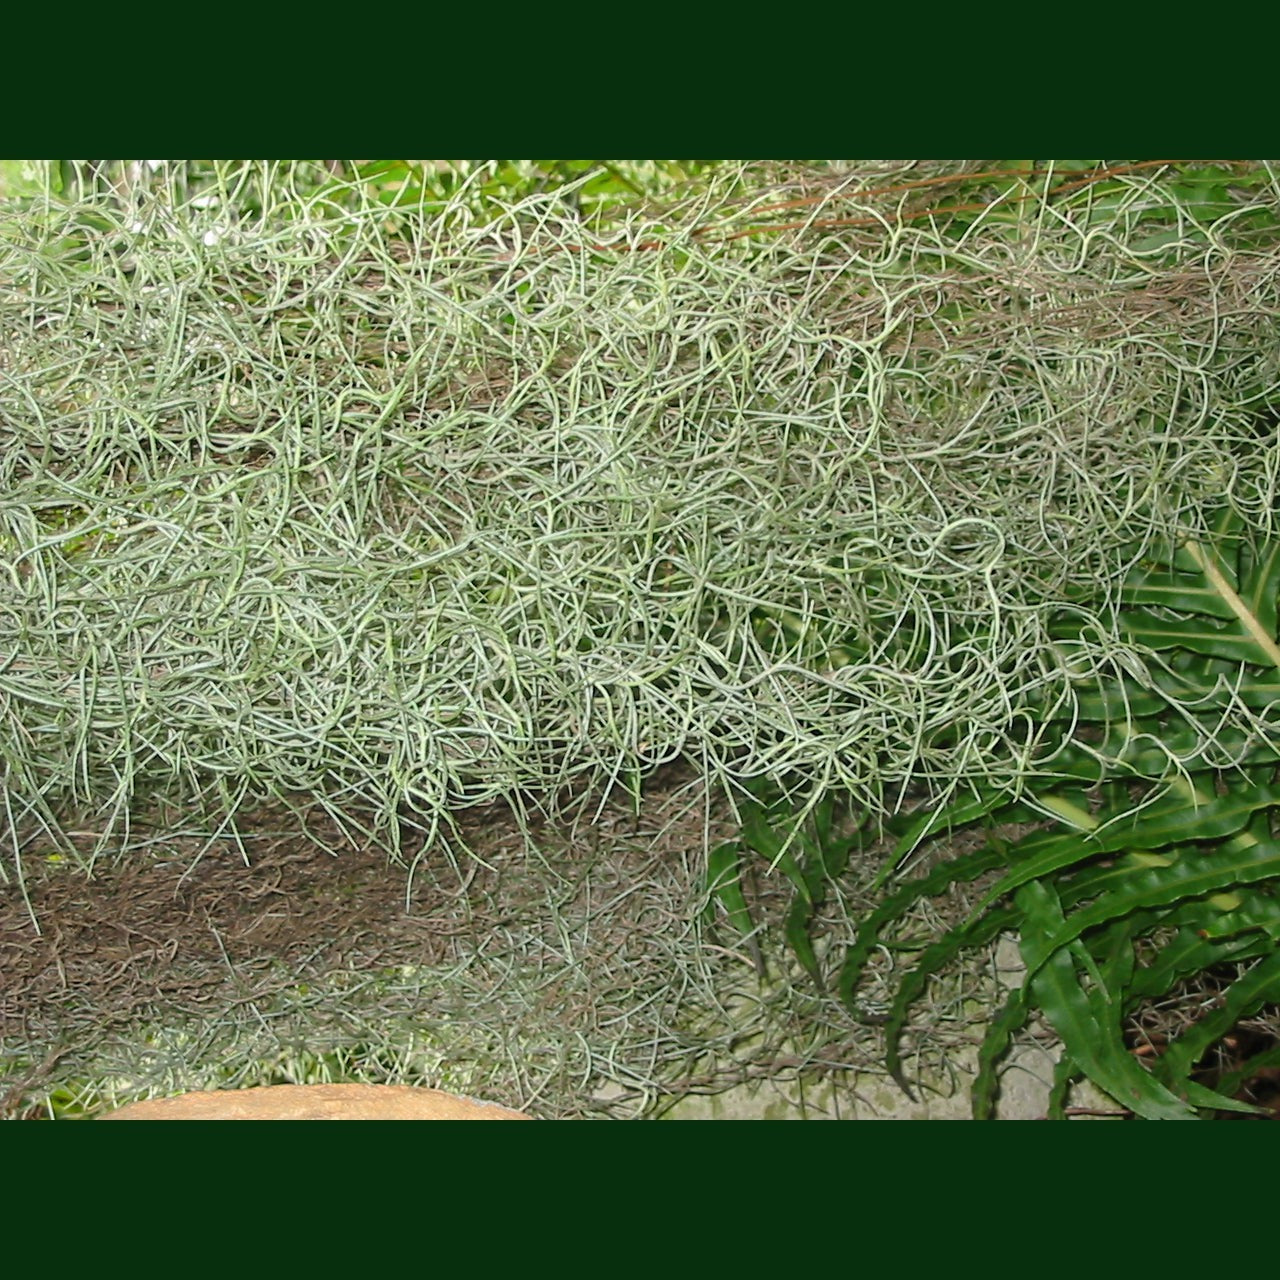 Tillandsia usneoides 'Spanish Moss or Grandfathers Beard TypeA